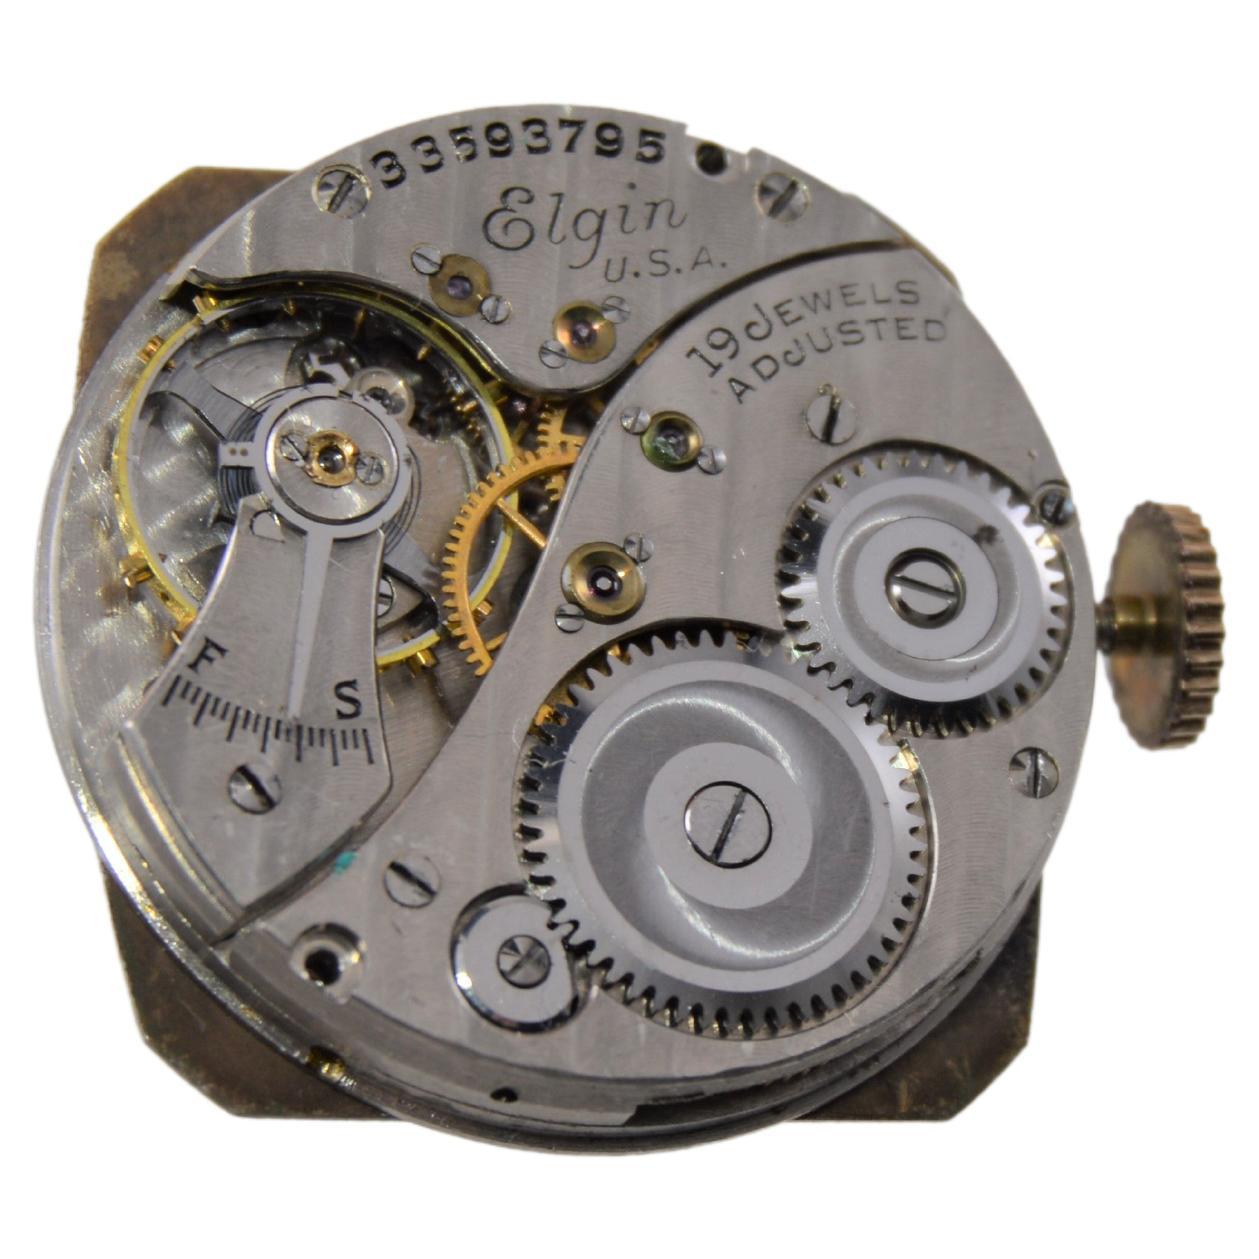 Elgin Yellow Gold Filled Tonneau Shape Watch Circa 1931 with Original Dial 9